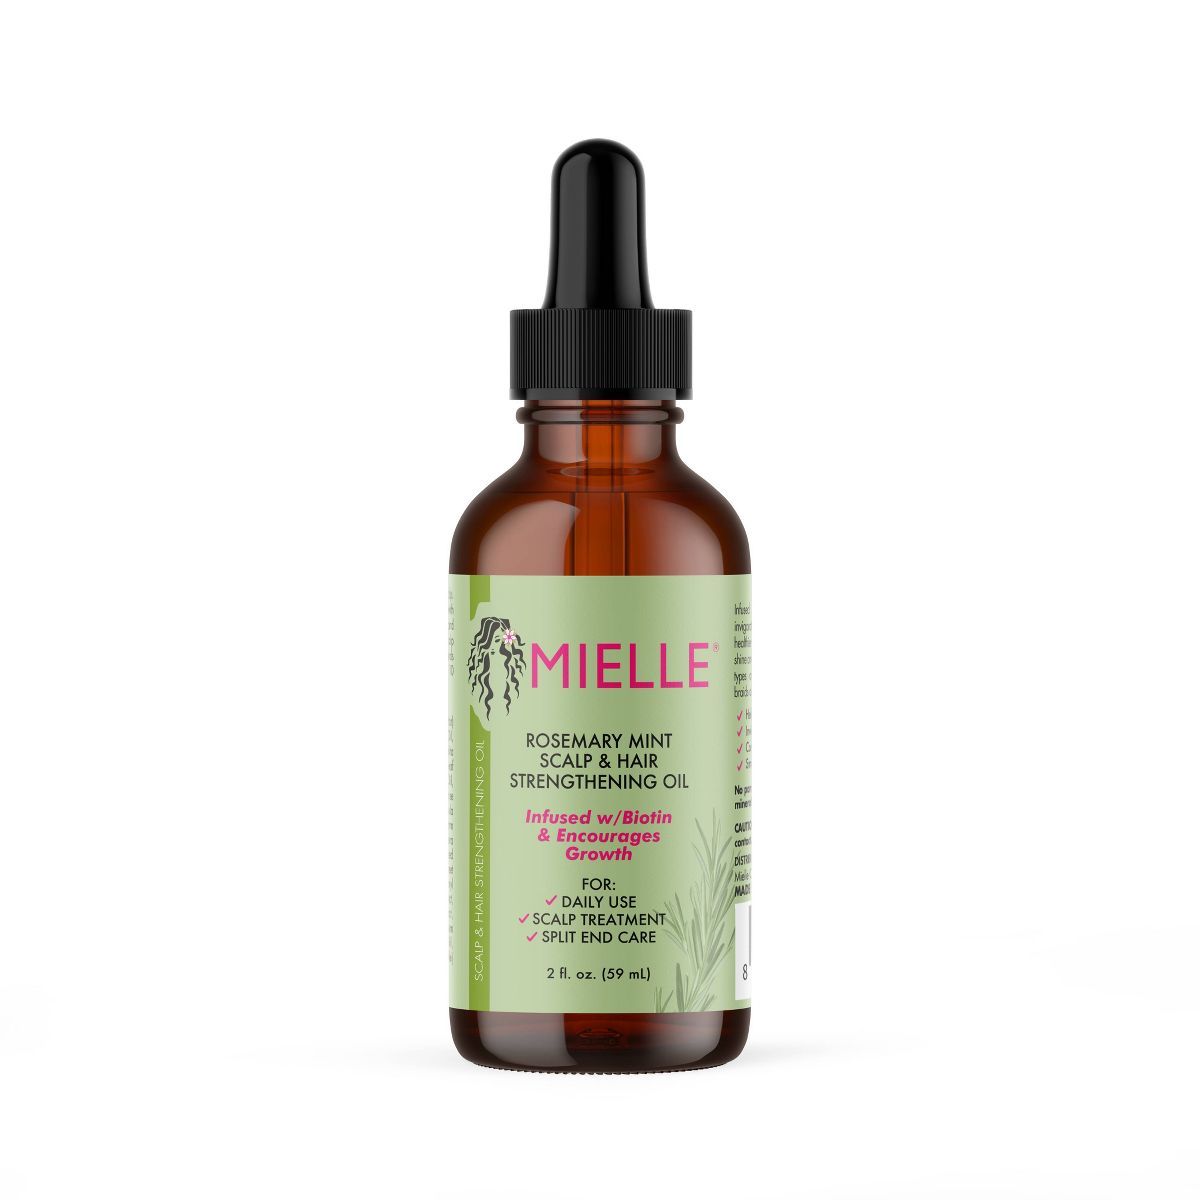 Mielle Organics Rosemary Mint Scalp & Strengthening Hair Oil Encourages Growth - 2 fl oz | Target